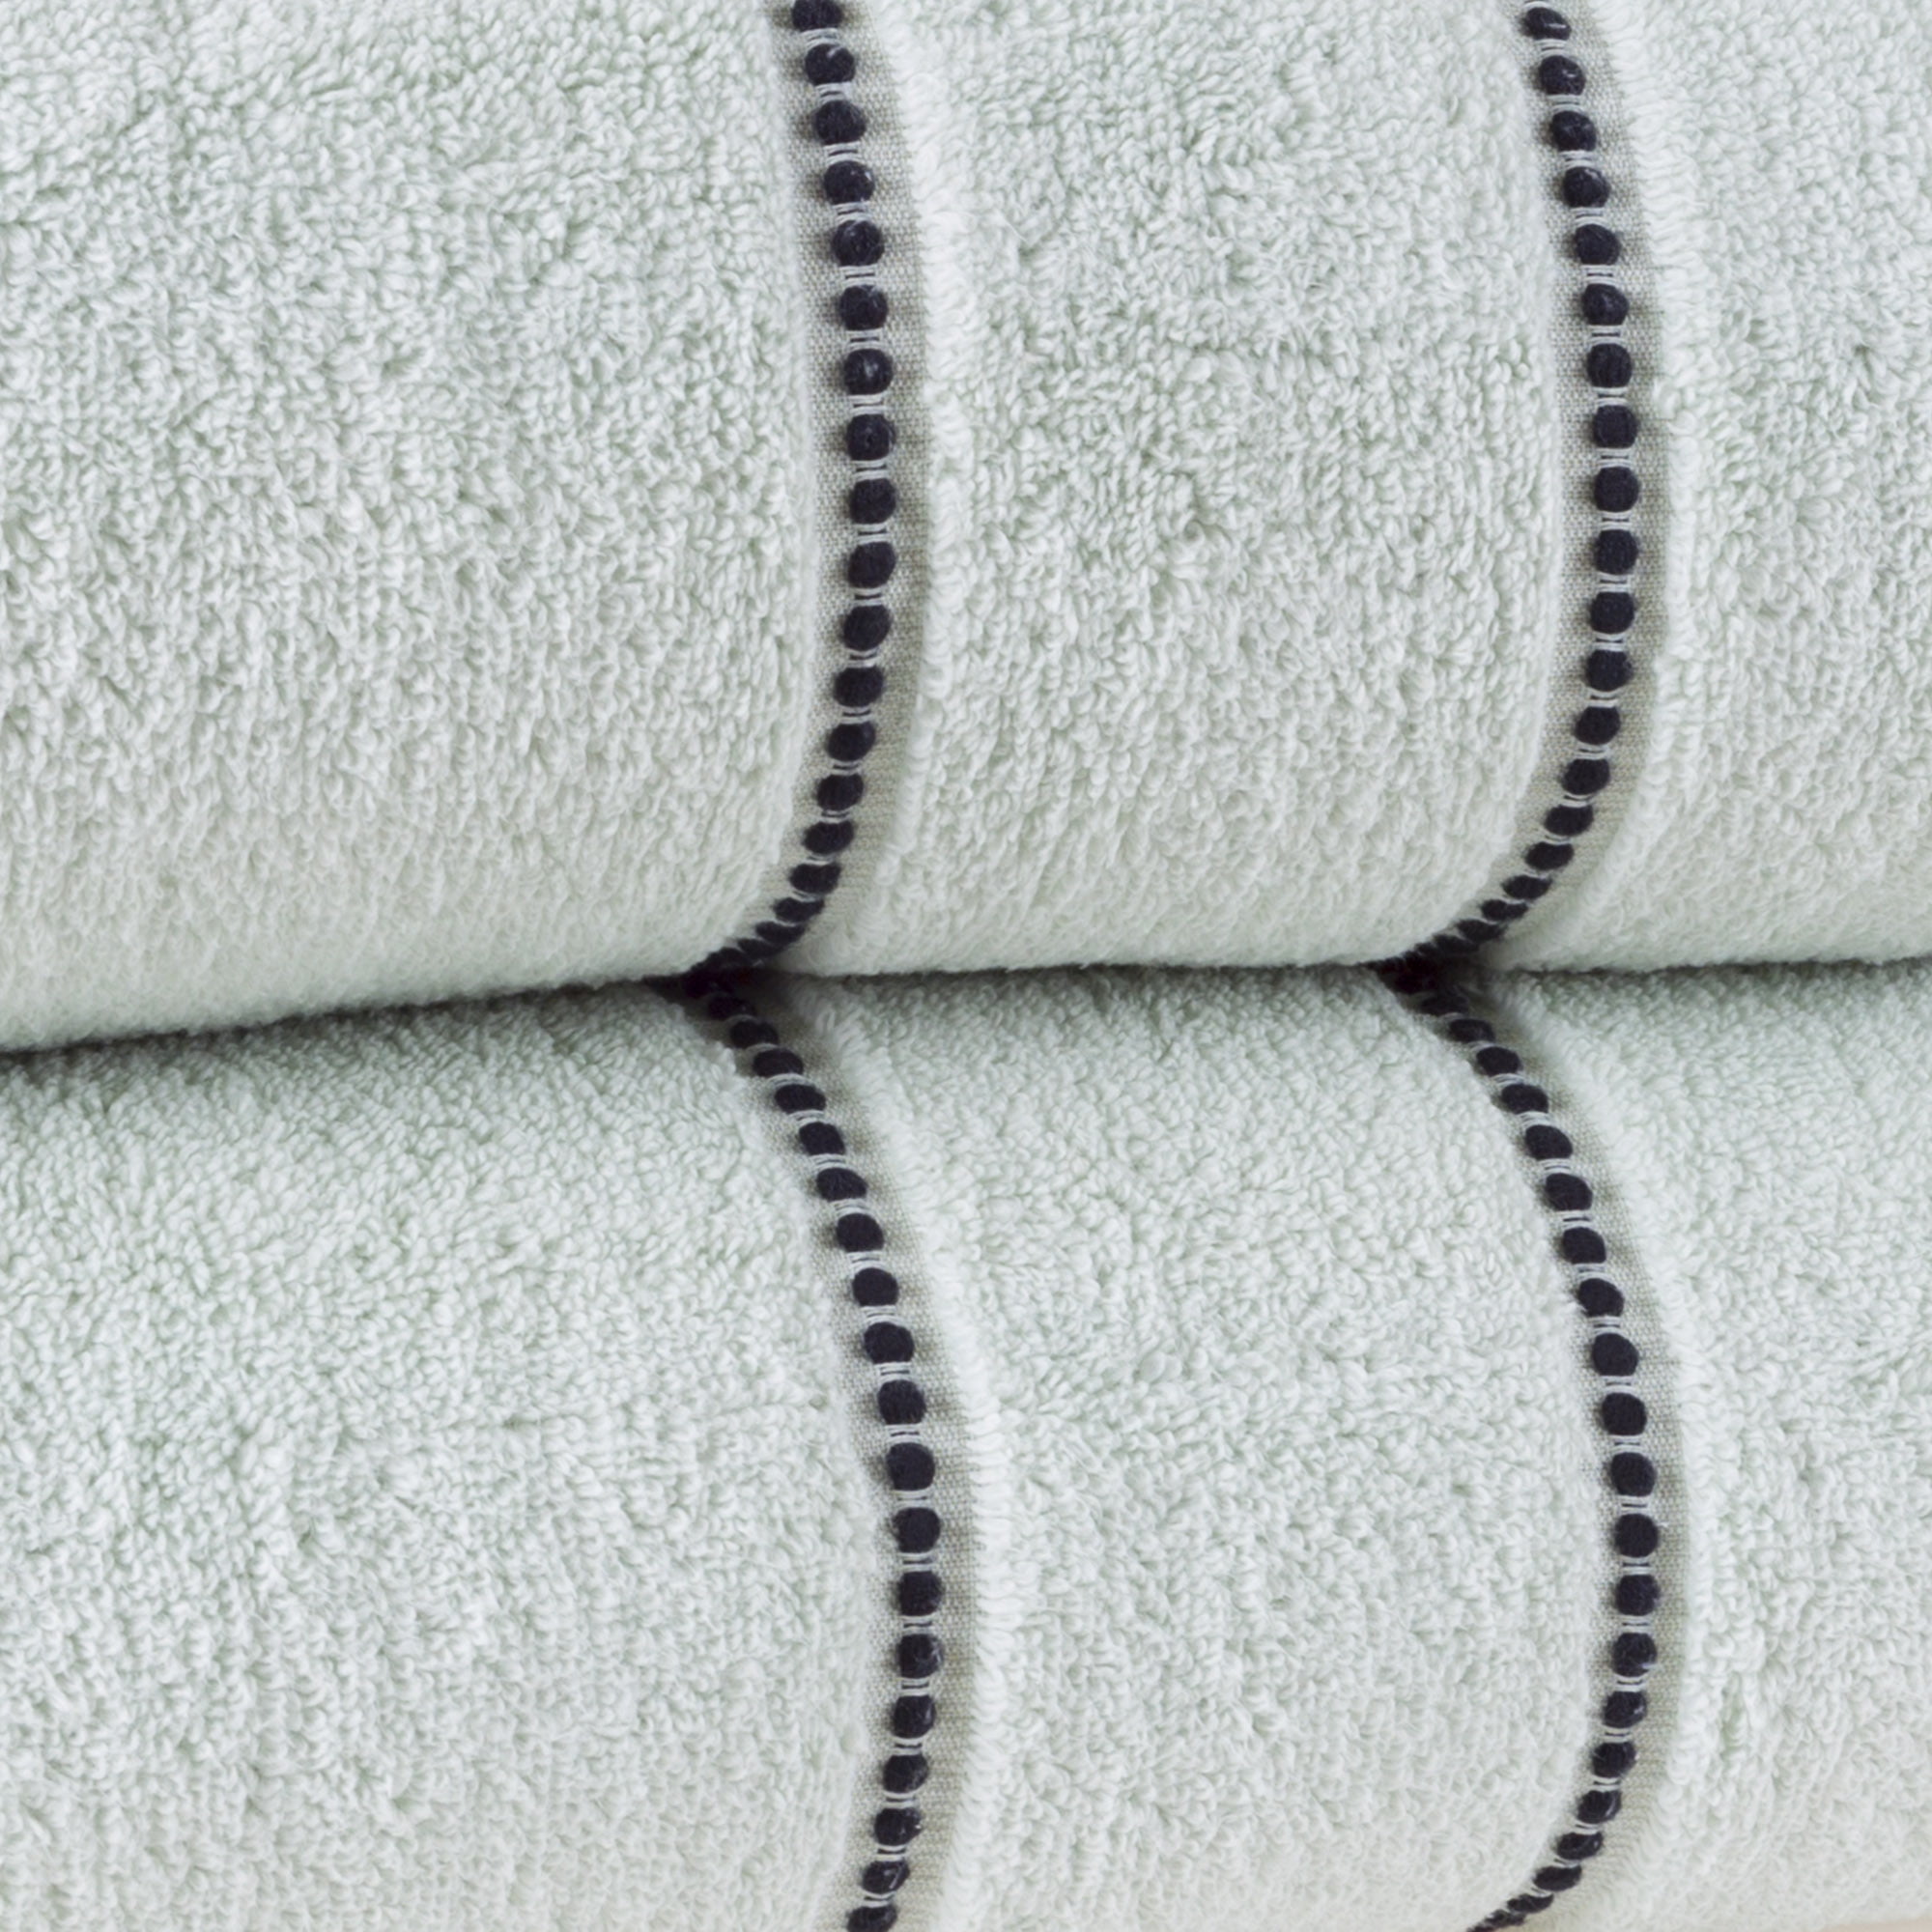 ESSELL Luxury 6-Piece Towel Set, 700 GSM 100% Cotton - 2 Bath Towels, 2 Hand Towels, 2 Washcloths, Zero Twists, Ultra Soft & Super Absorbent Meadow